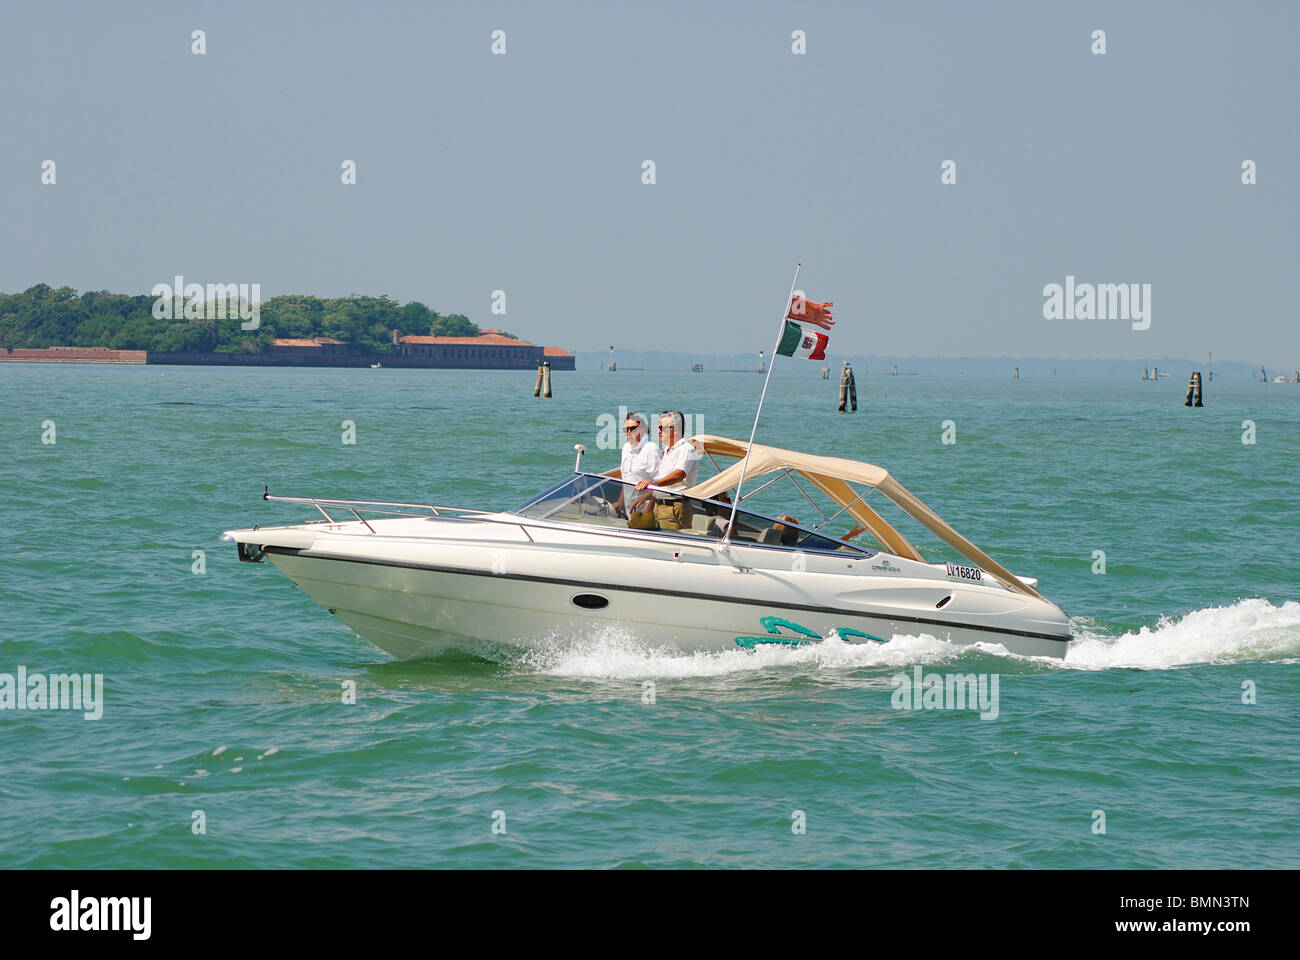 Two Italian men in a speed boat on the Venetian lagoon Stock Photo